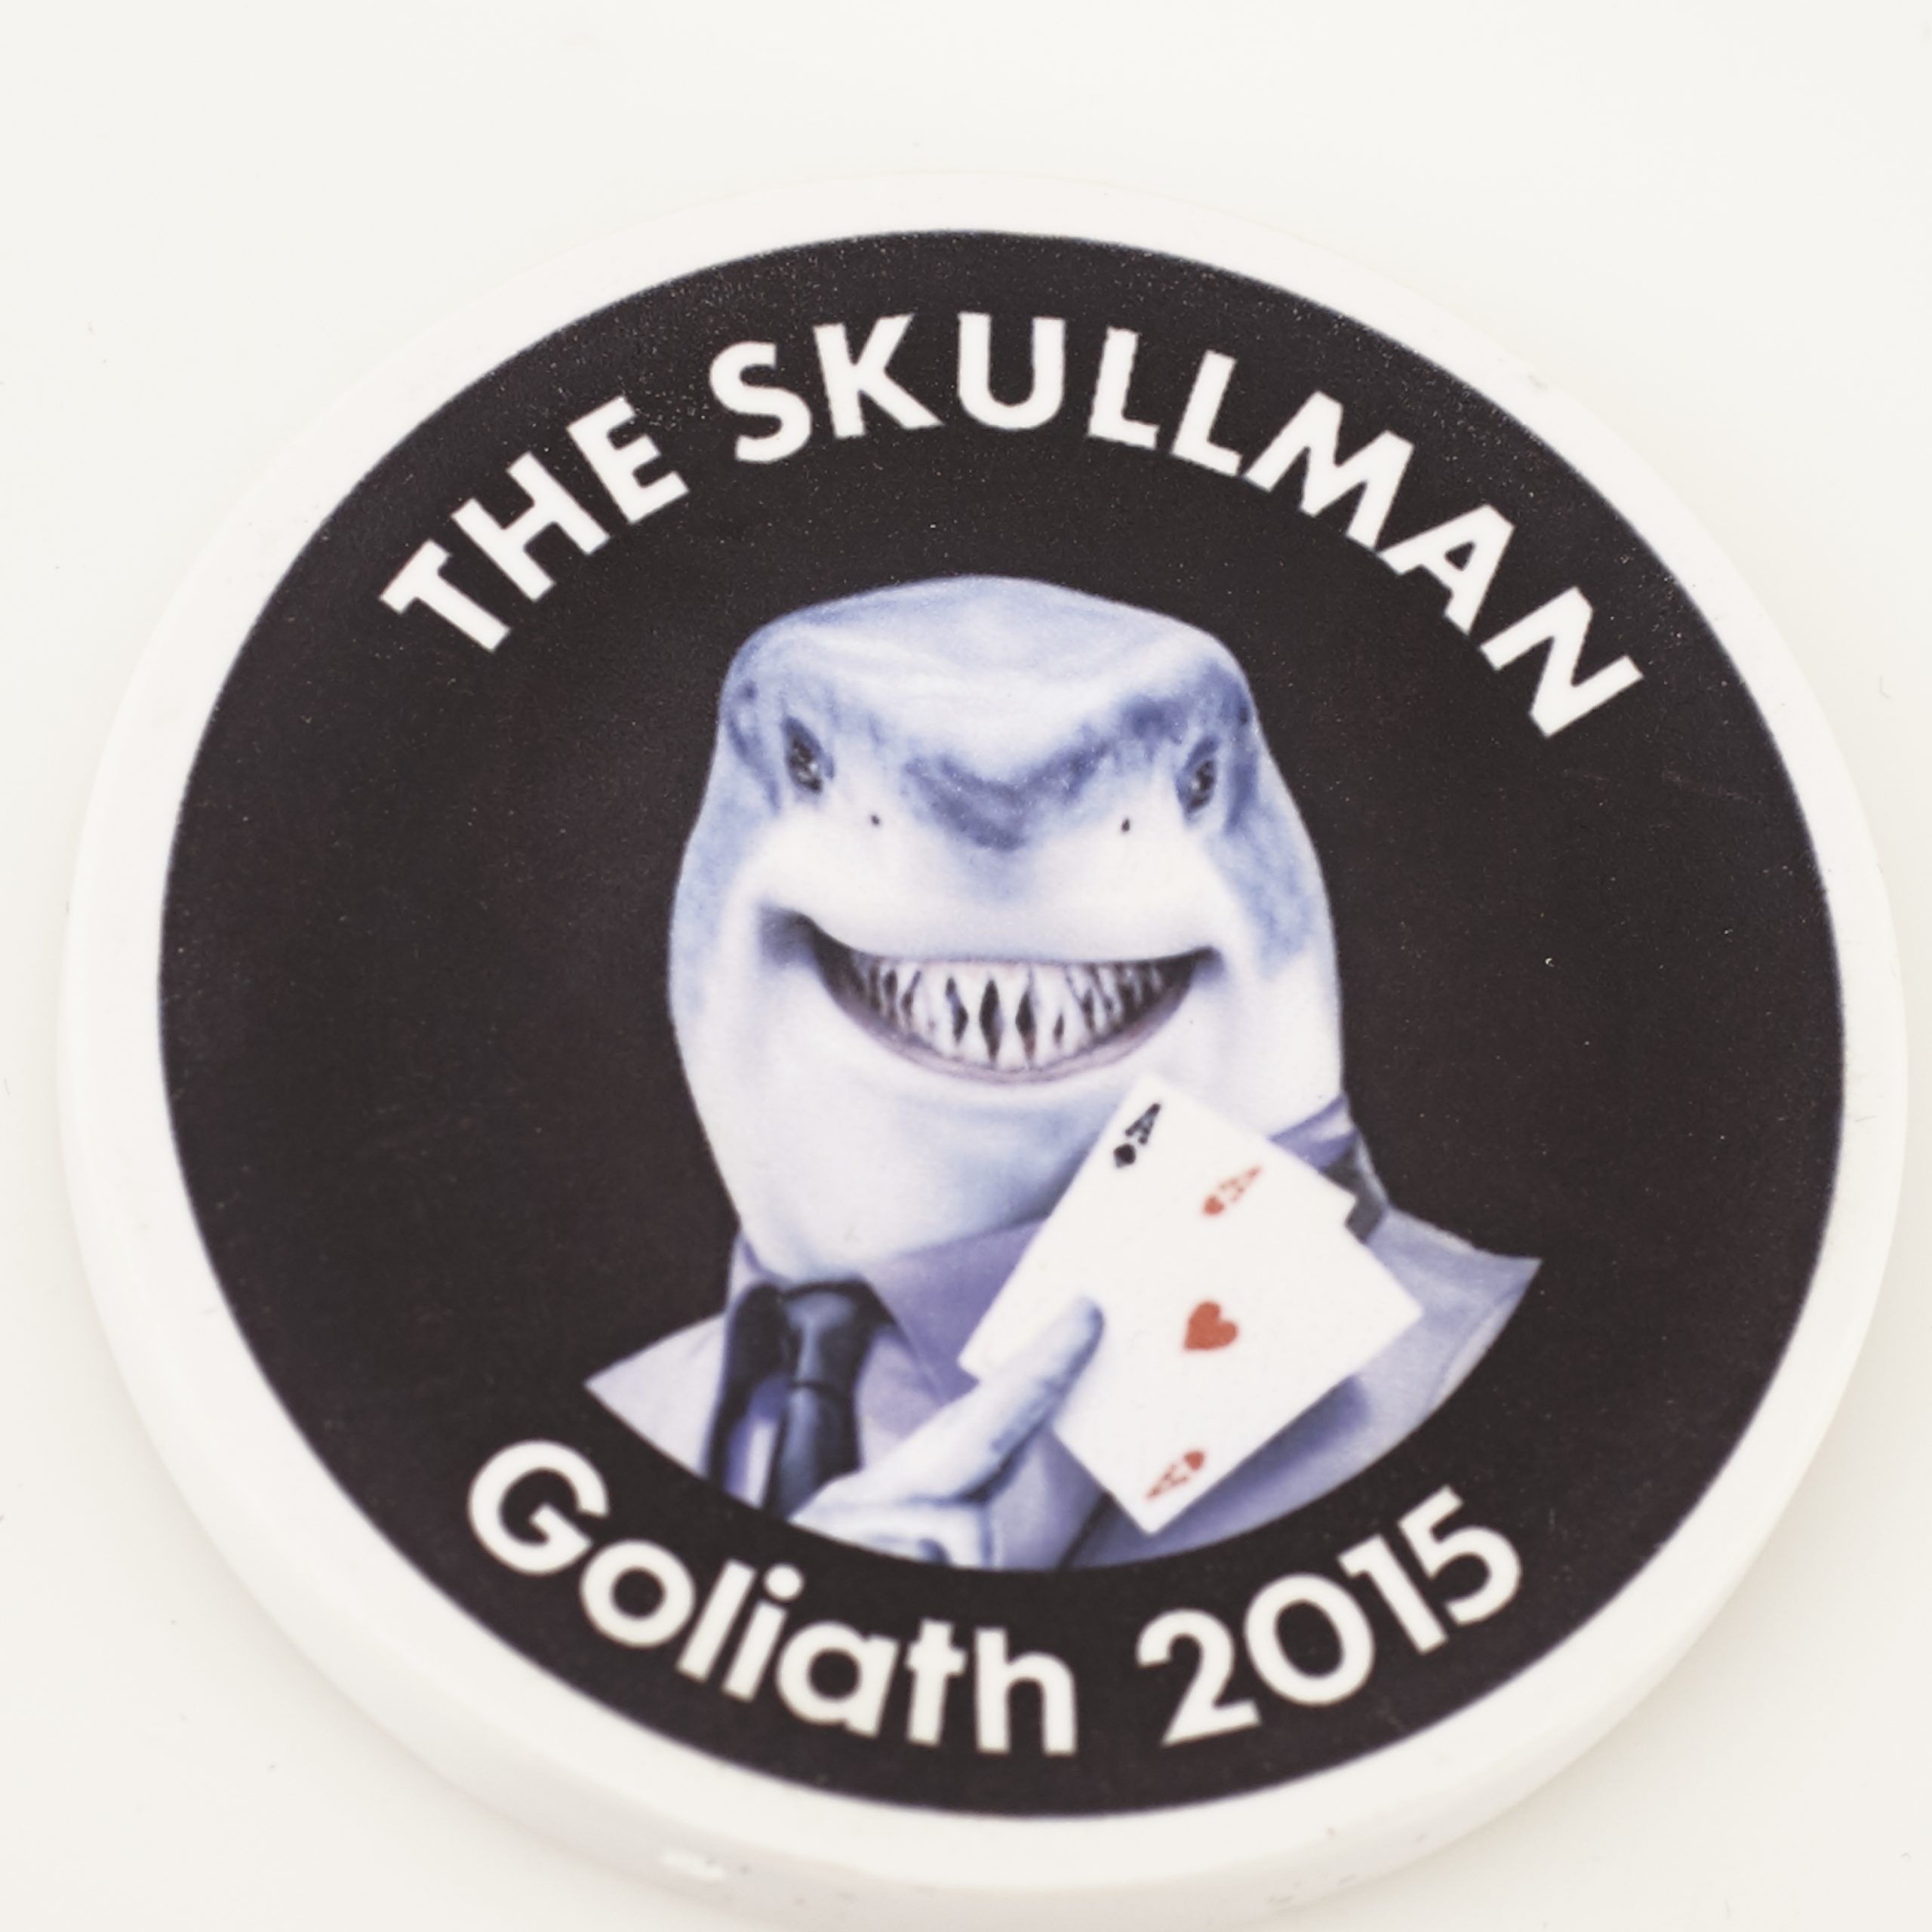 THE SKULLMAN, GOLIATH 2015, GROSVENOR CASINOS, (LARGE) Poker Card Guard Chip